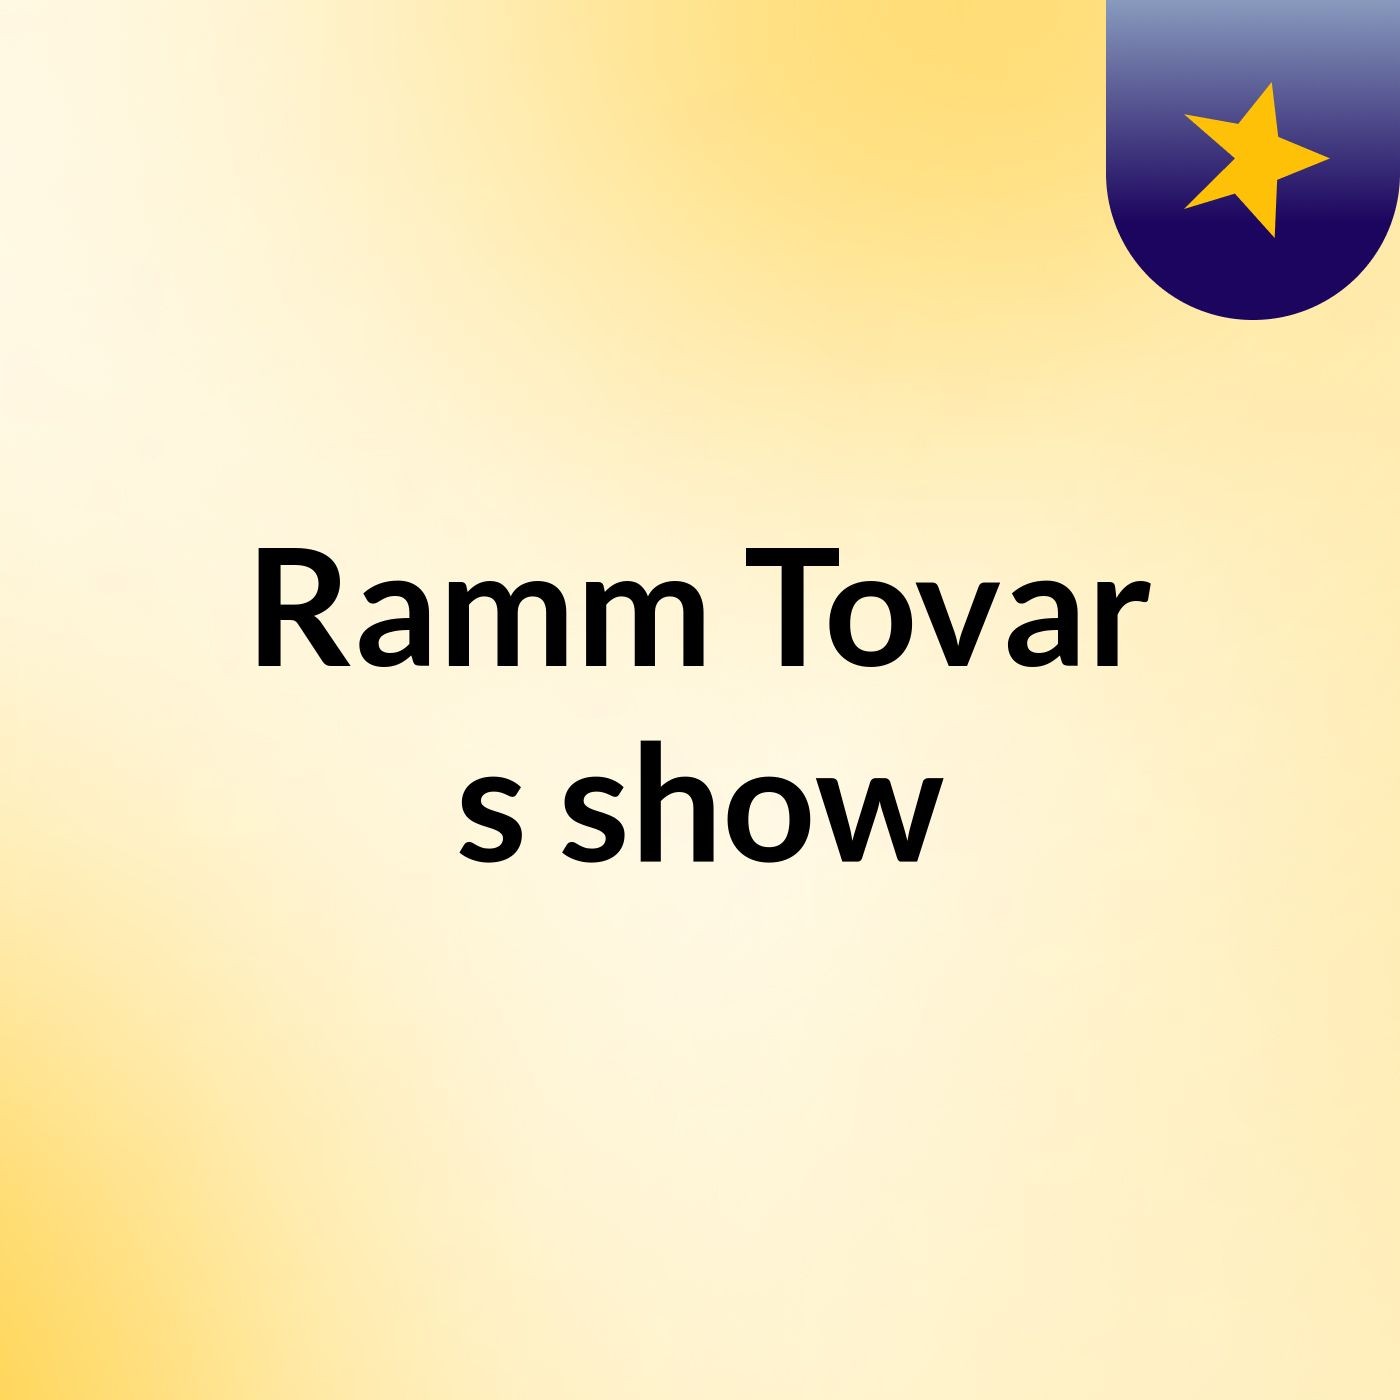 Ramm Tovar's show